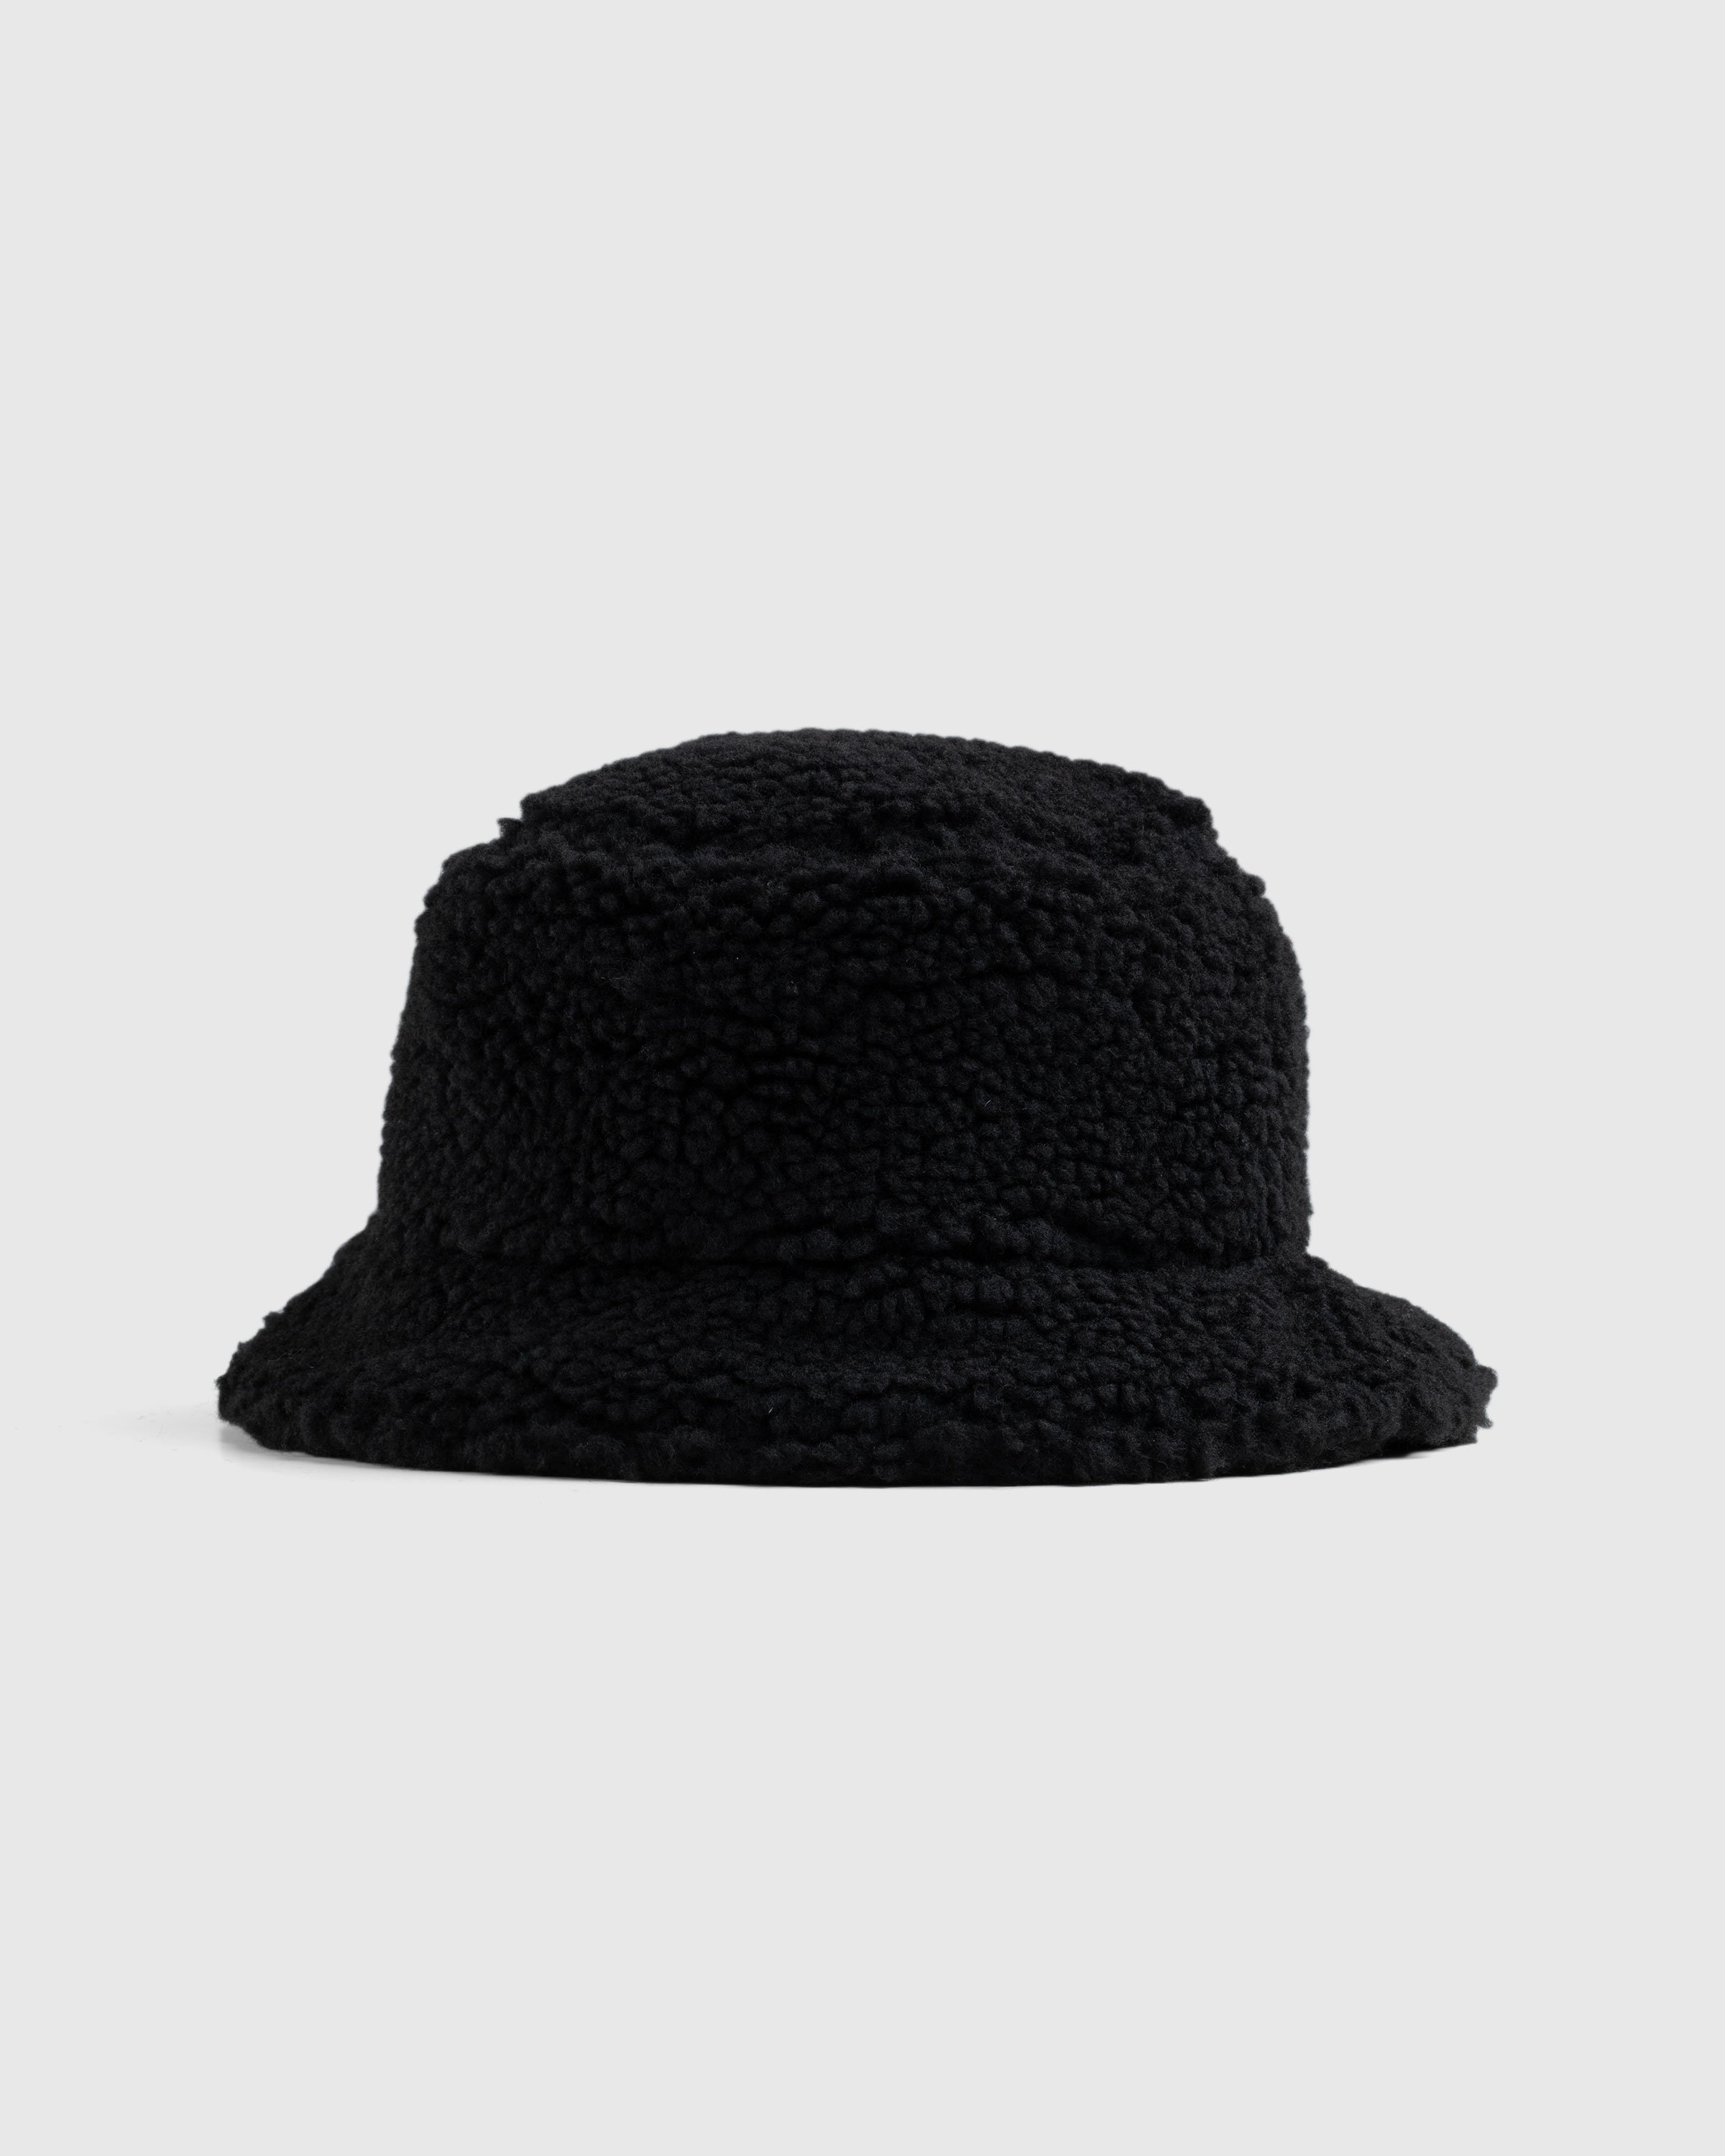 Carhartt WIP - Prentis Bucket Hat Black - Accessories - Black - Image 2